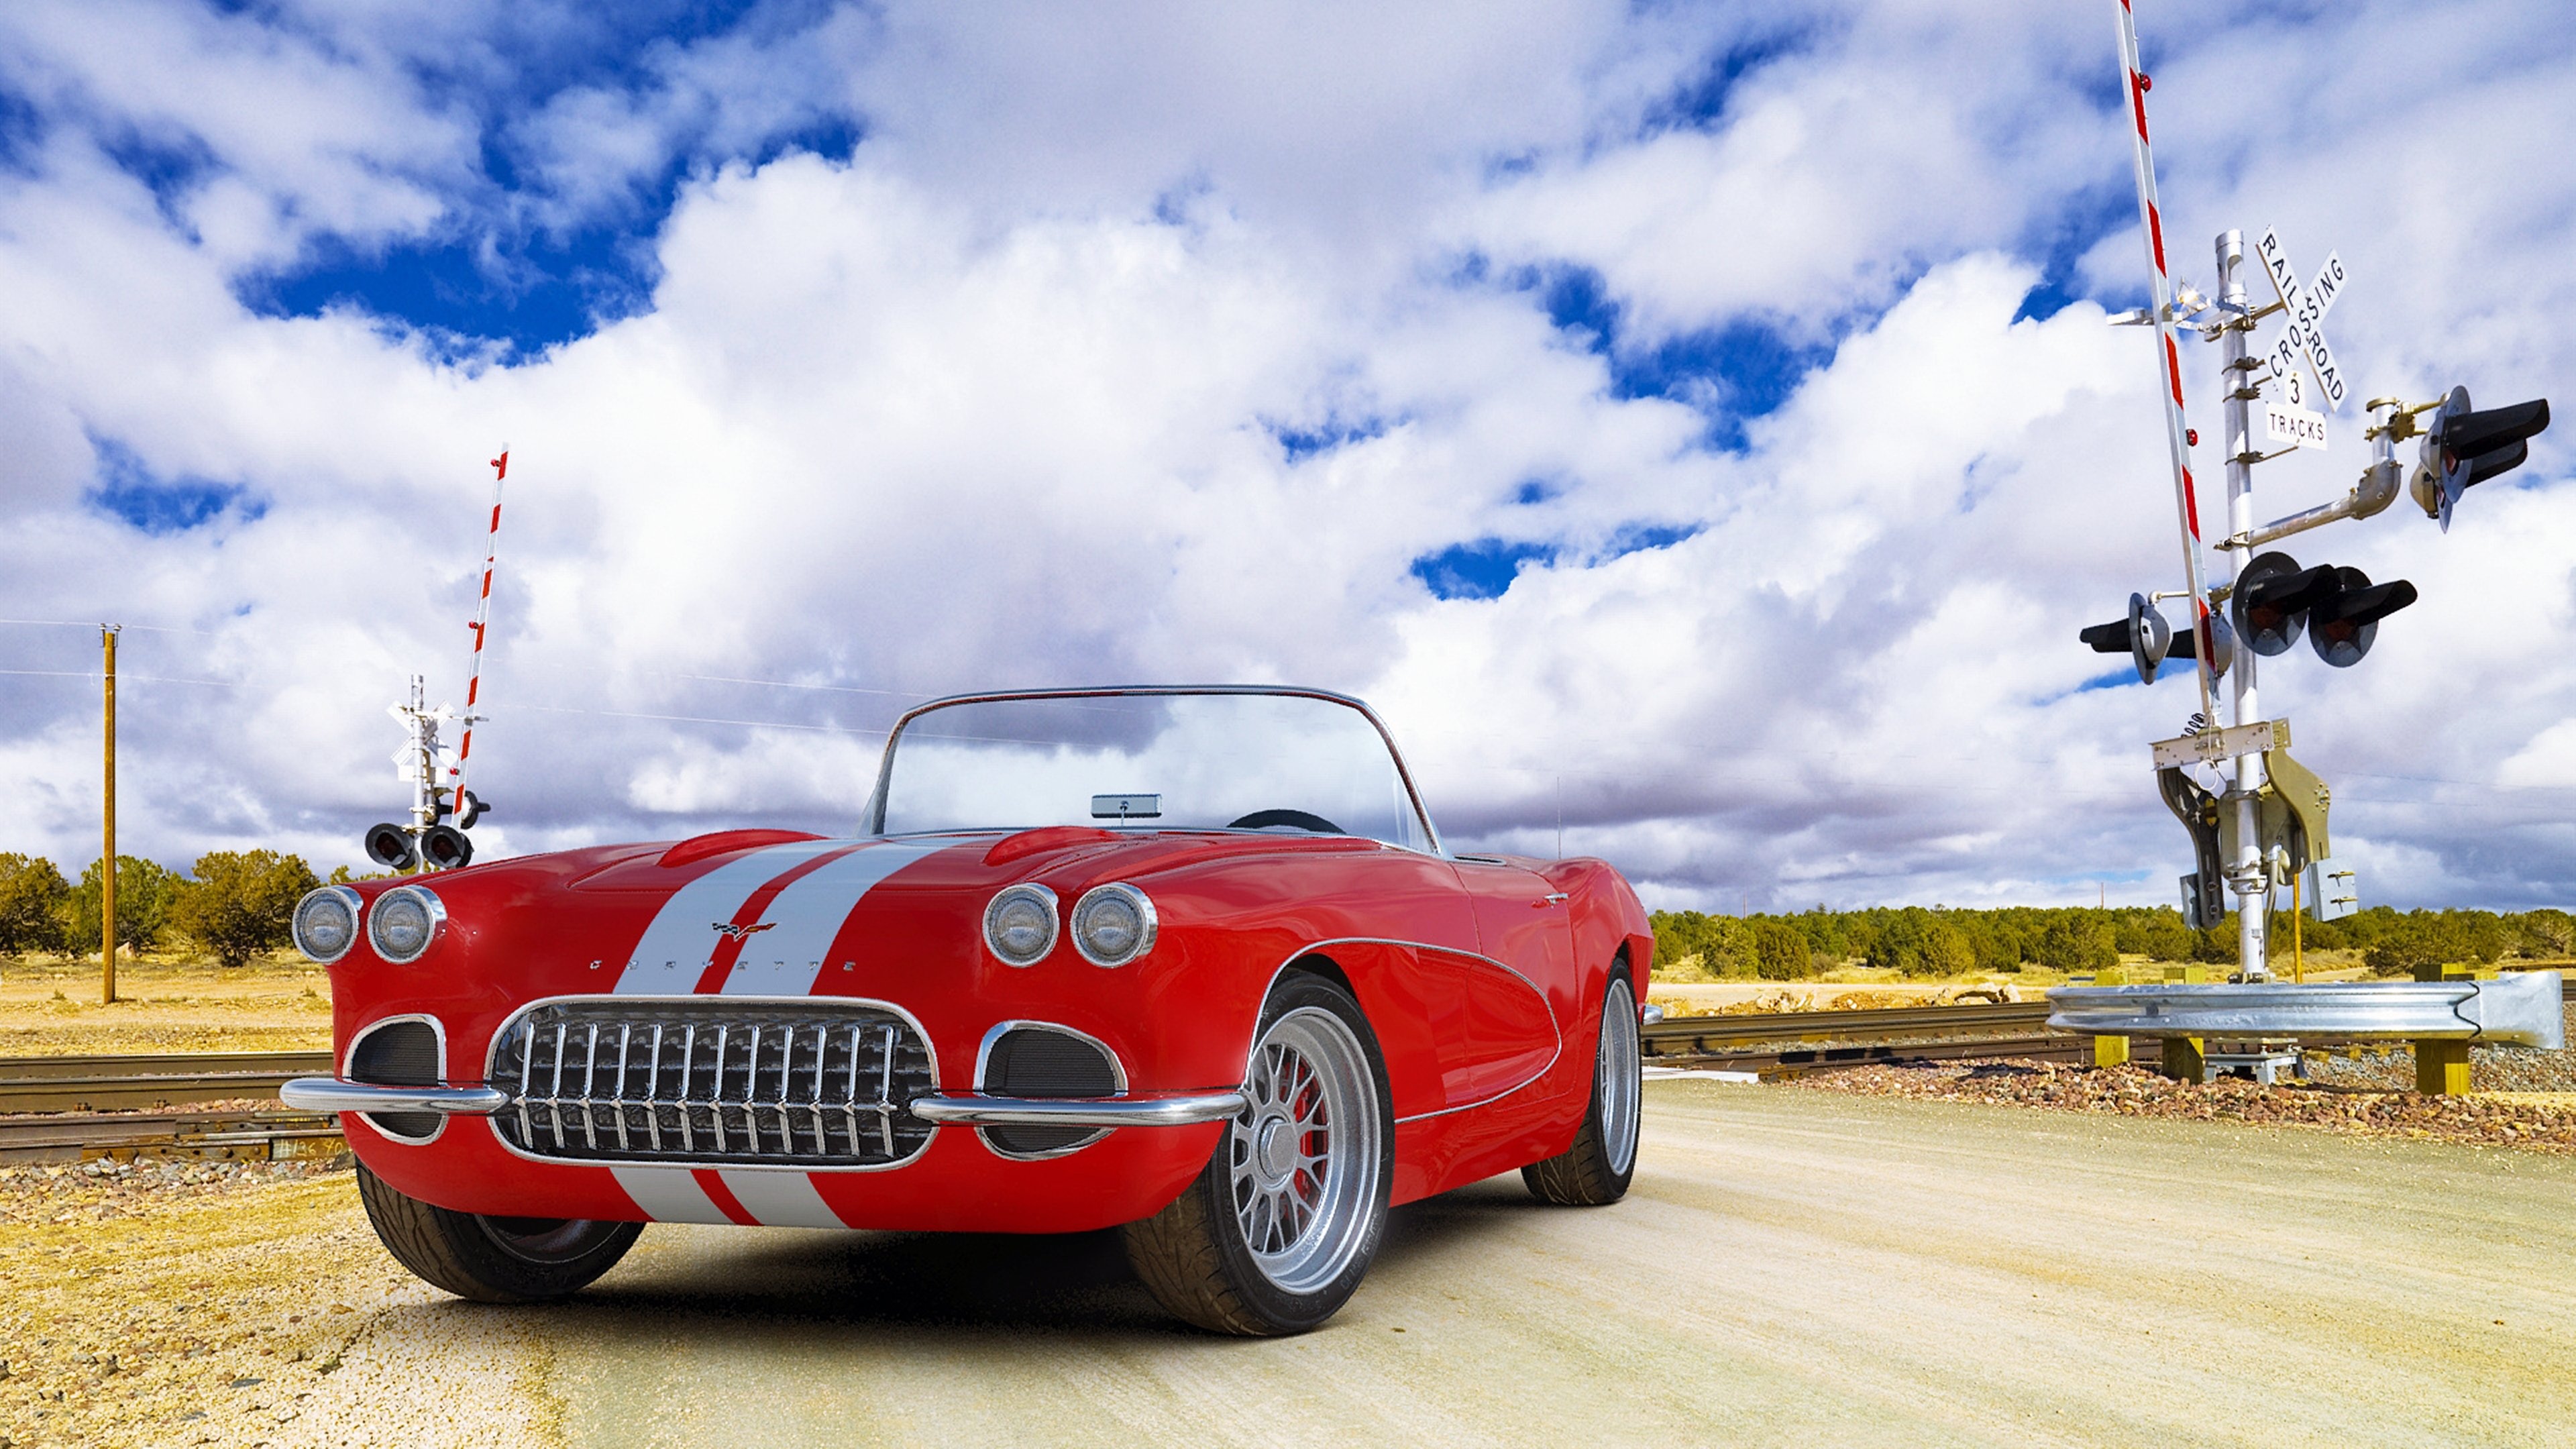 1961, Chevrolet, Corvette, Sky, Clouds, Red, Cars, Classic, Old, Crossing, Railroad, Landscape, Motors Wallpaper